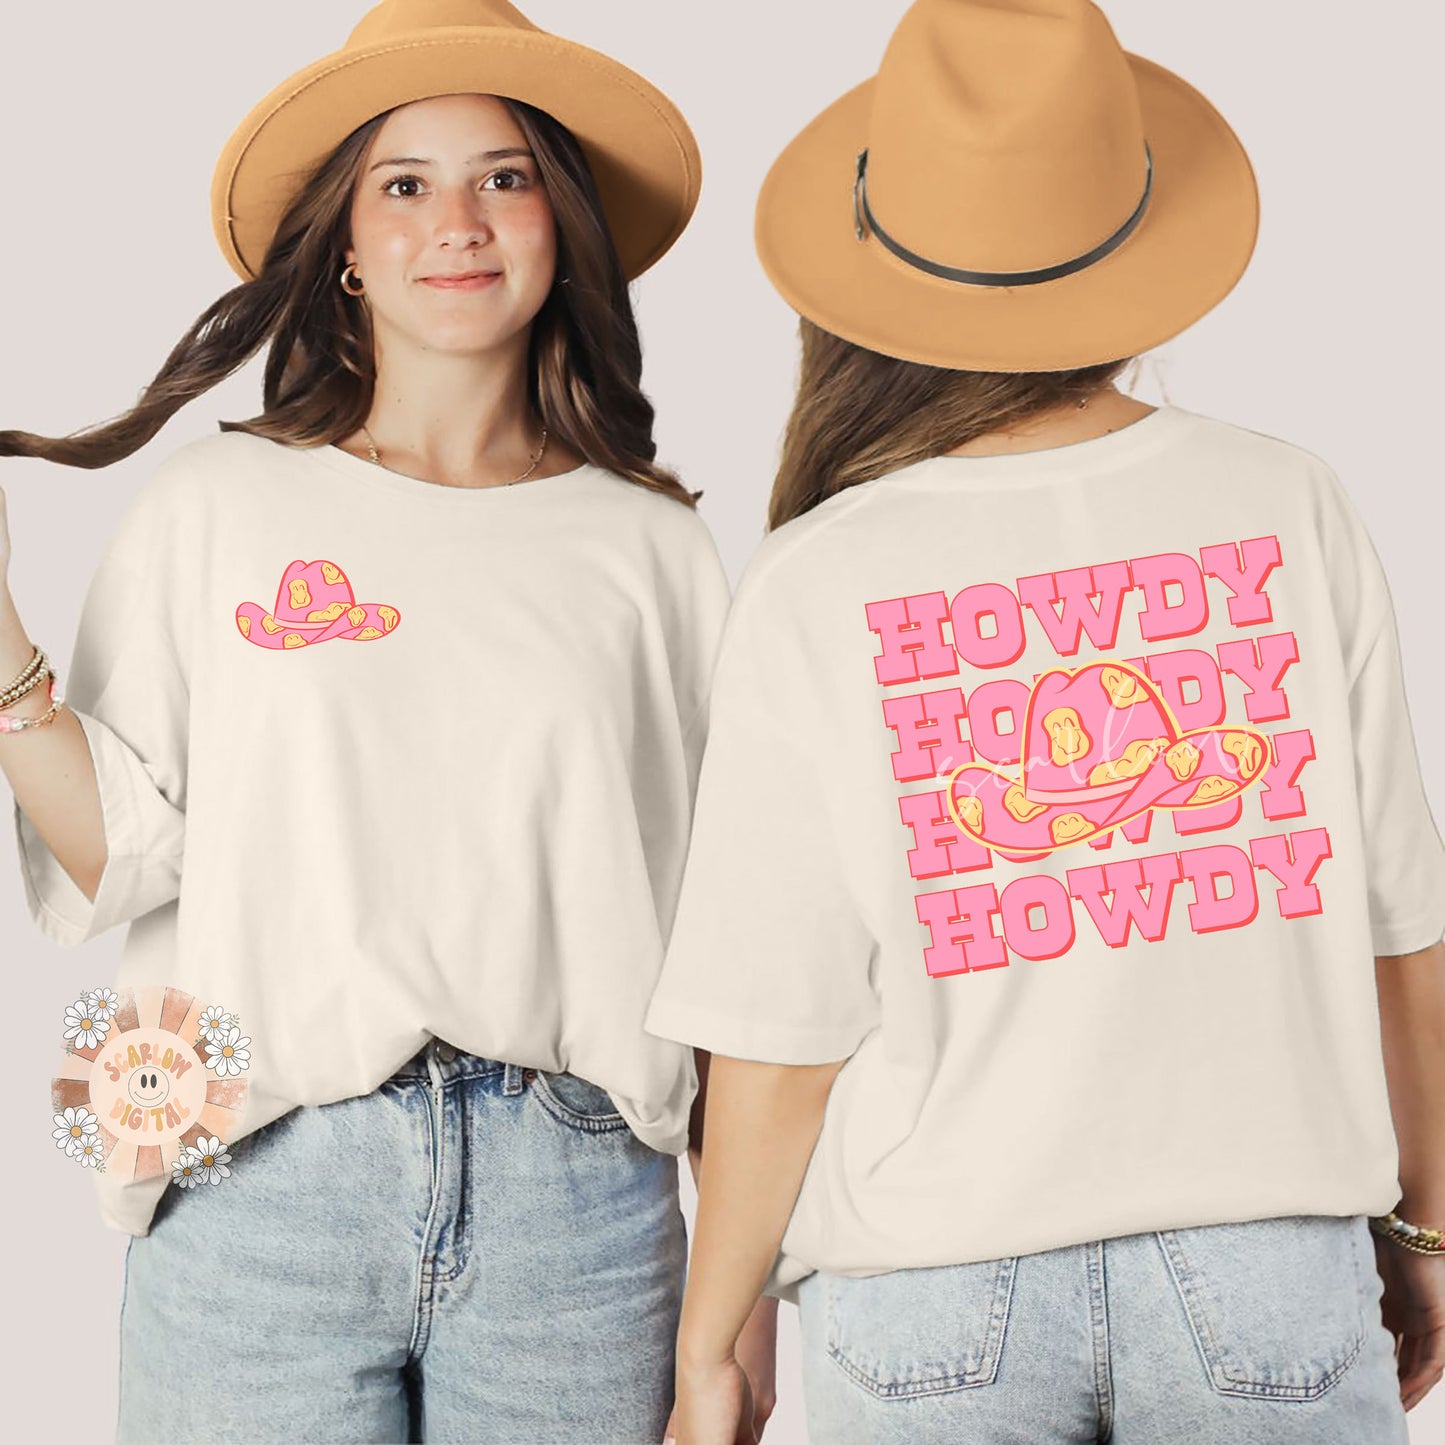 Howdy PNG Pocket and Back Bundle-Cowgirl Sublimation Digital Design Download-front and back png bundle, pocket png, cowgirl hat png design